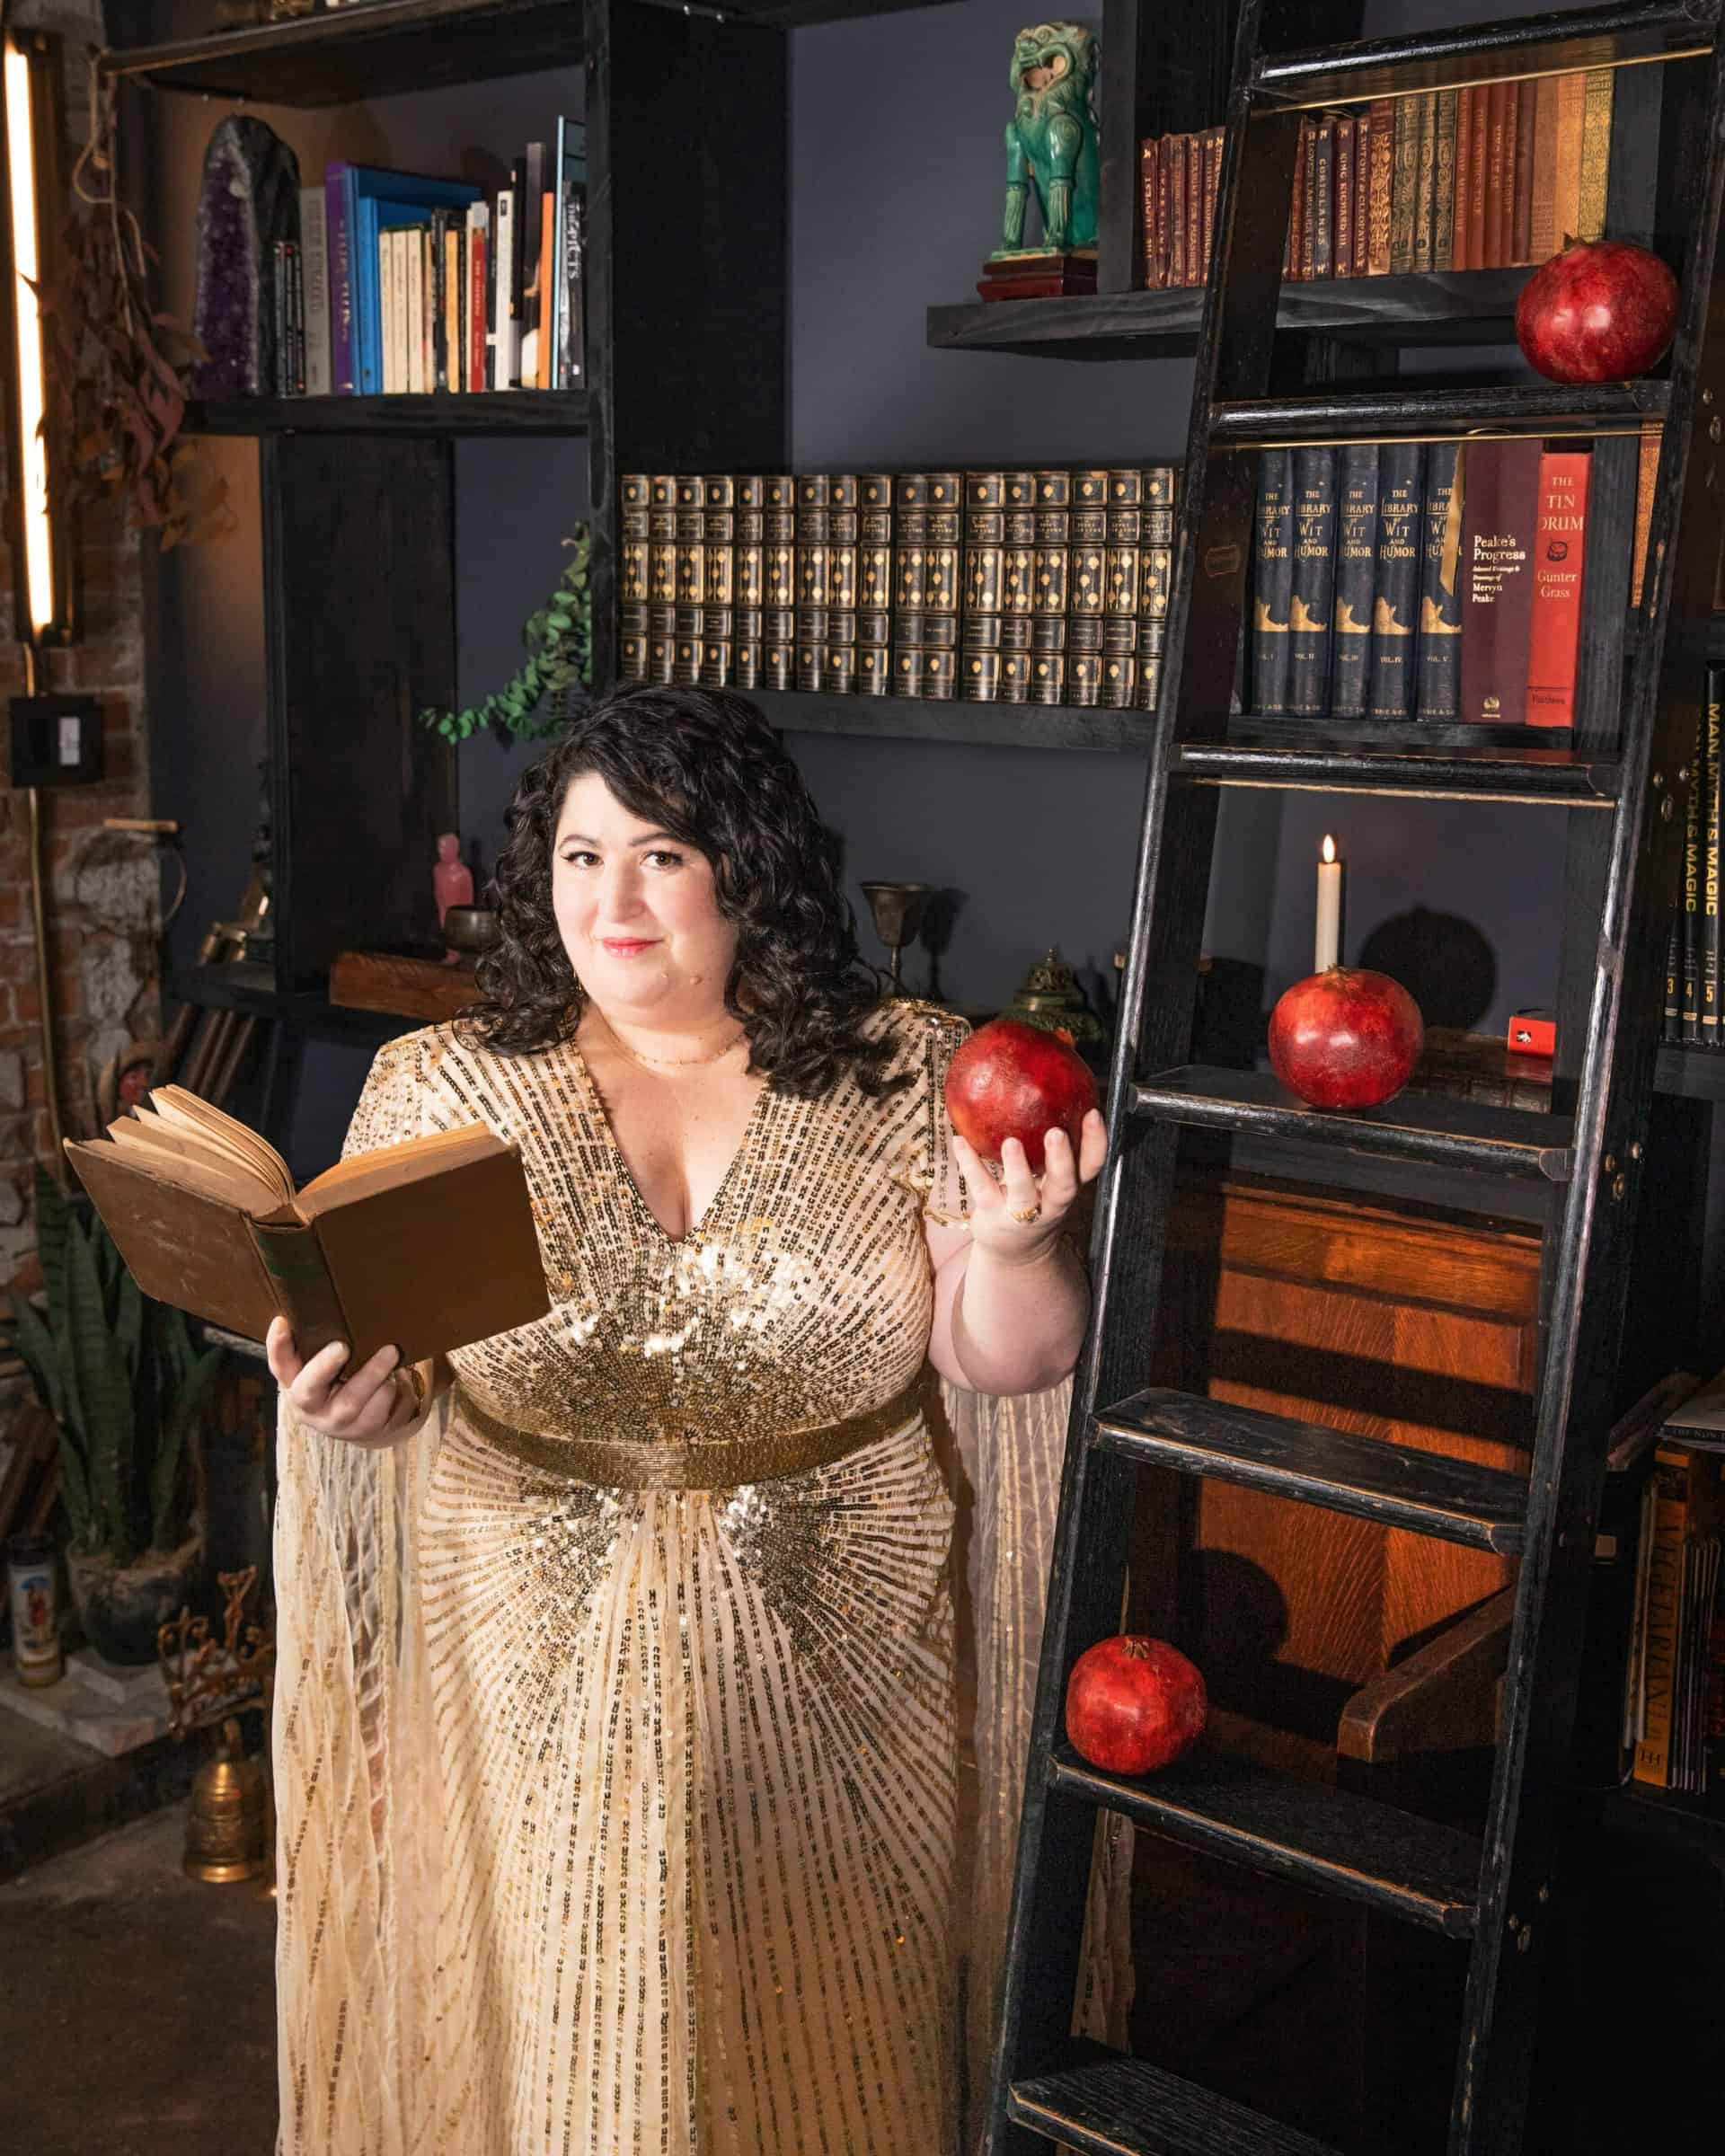 Kara Loewentheil holding a book and a pomegranate.